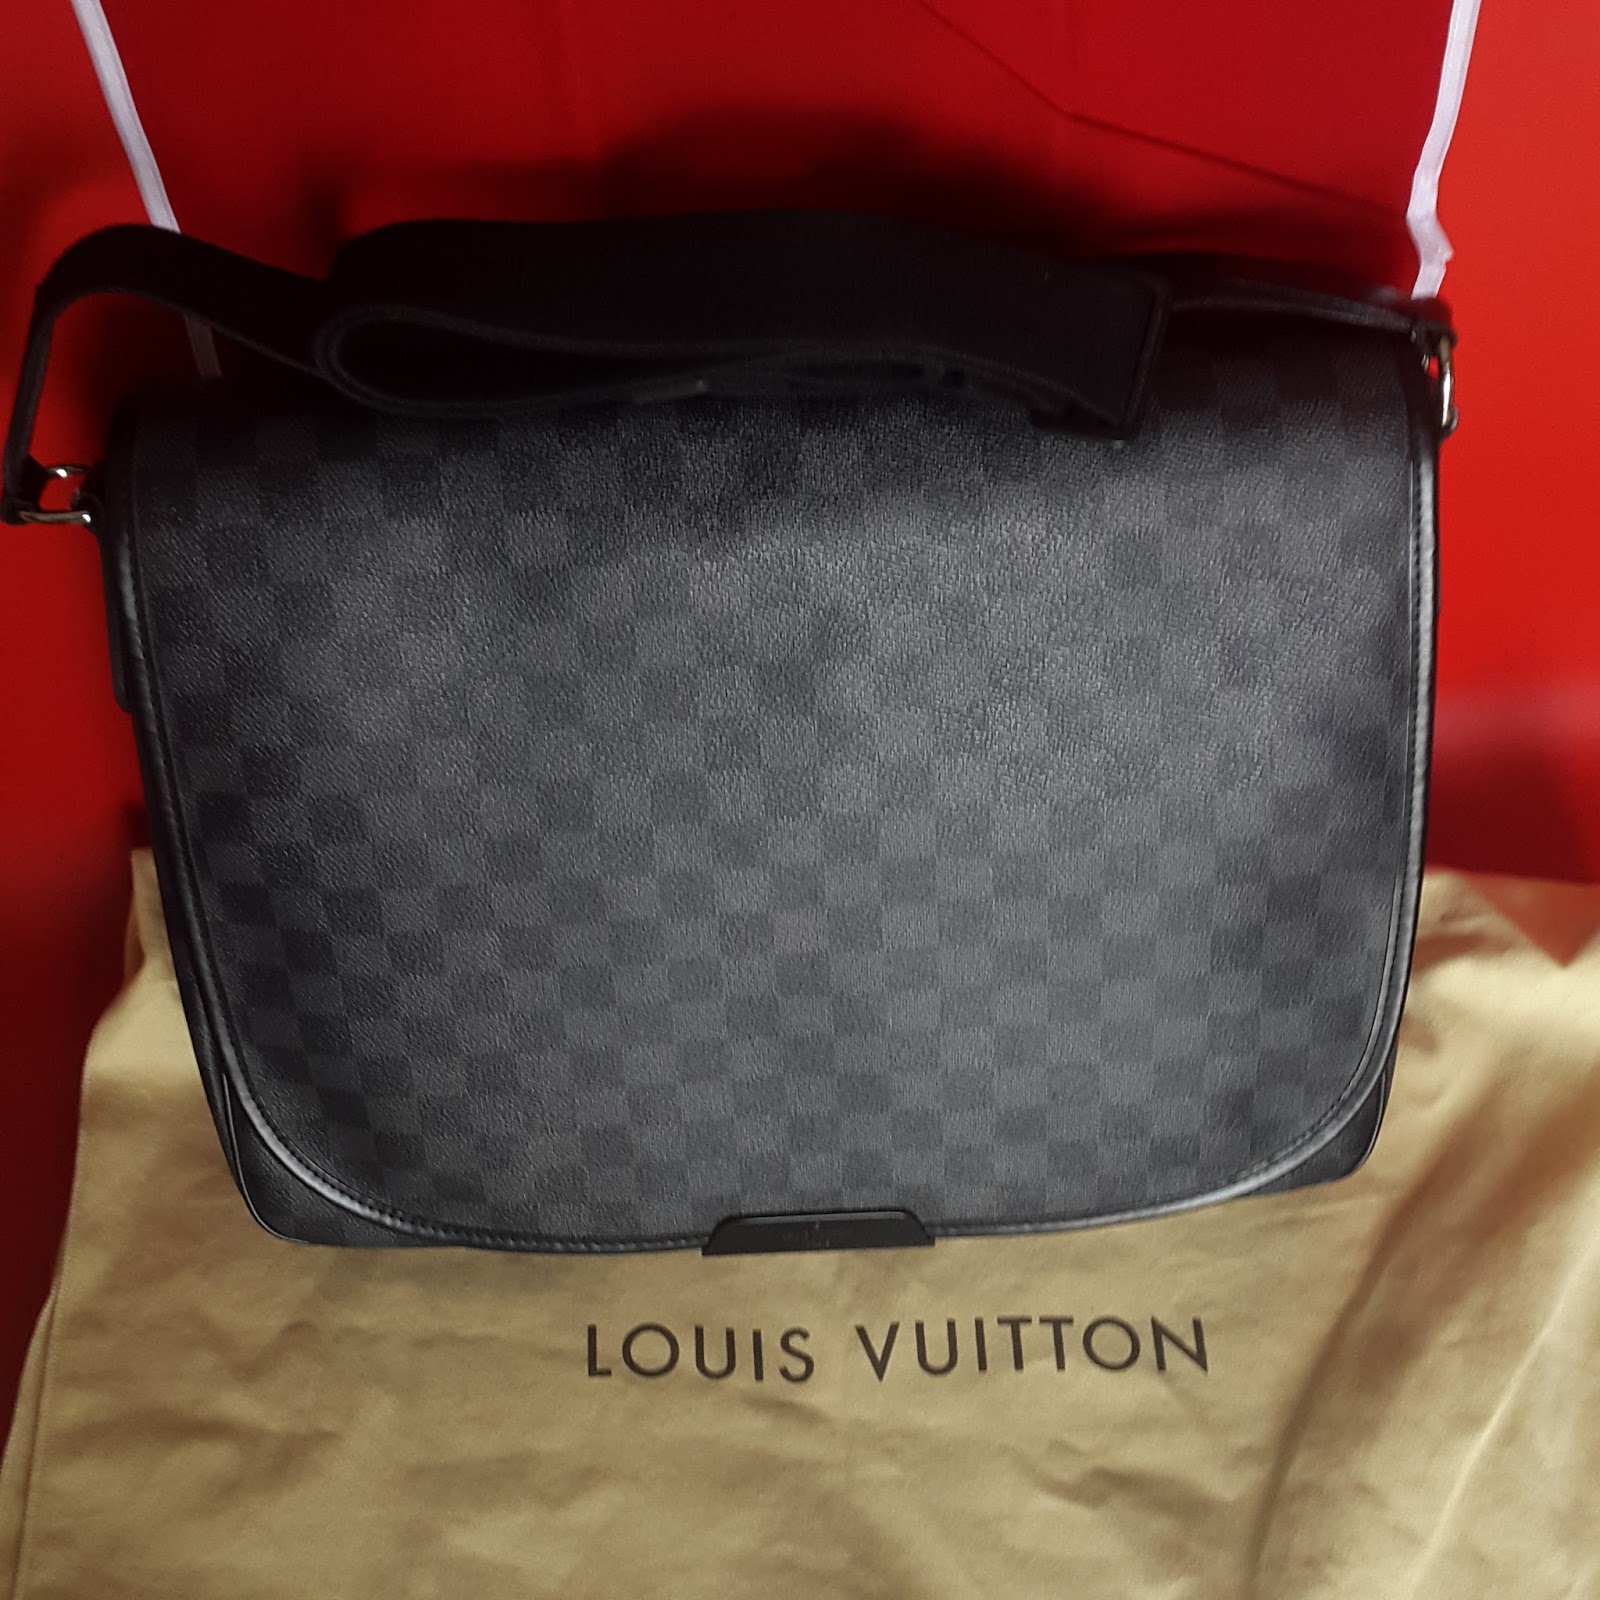 Jual Beli Tas Louis Vuitton Original Second